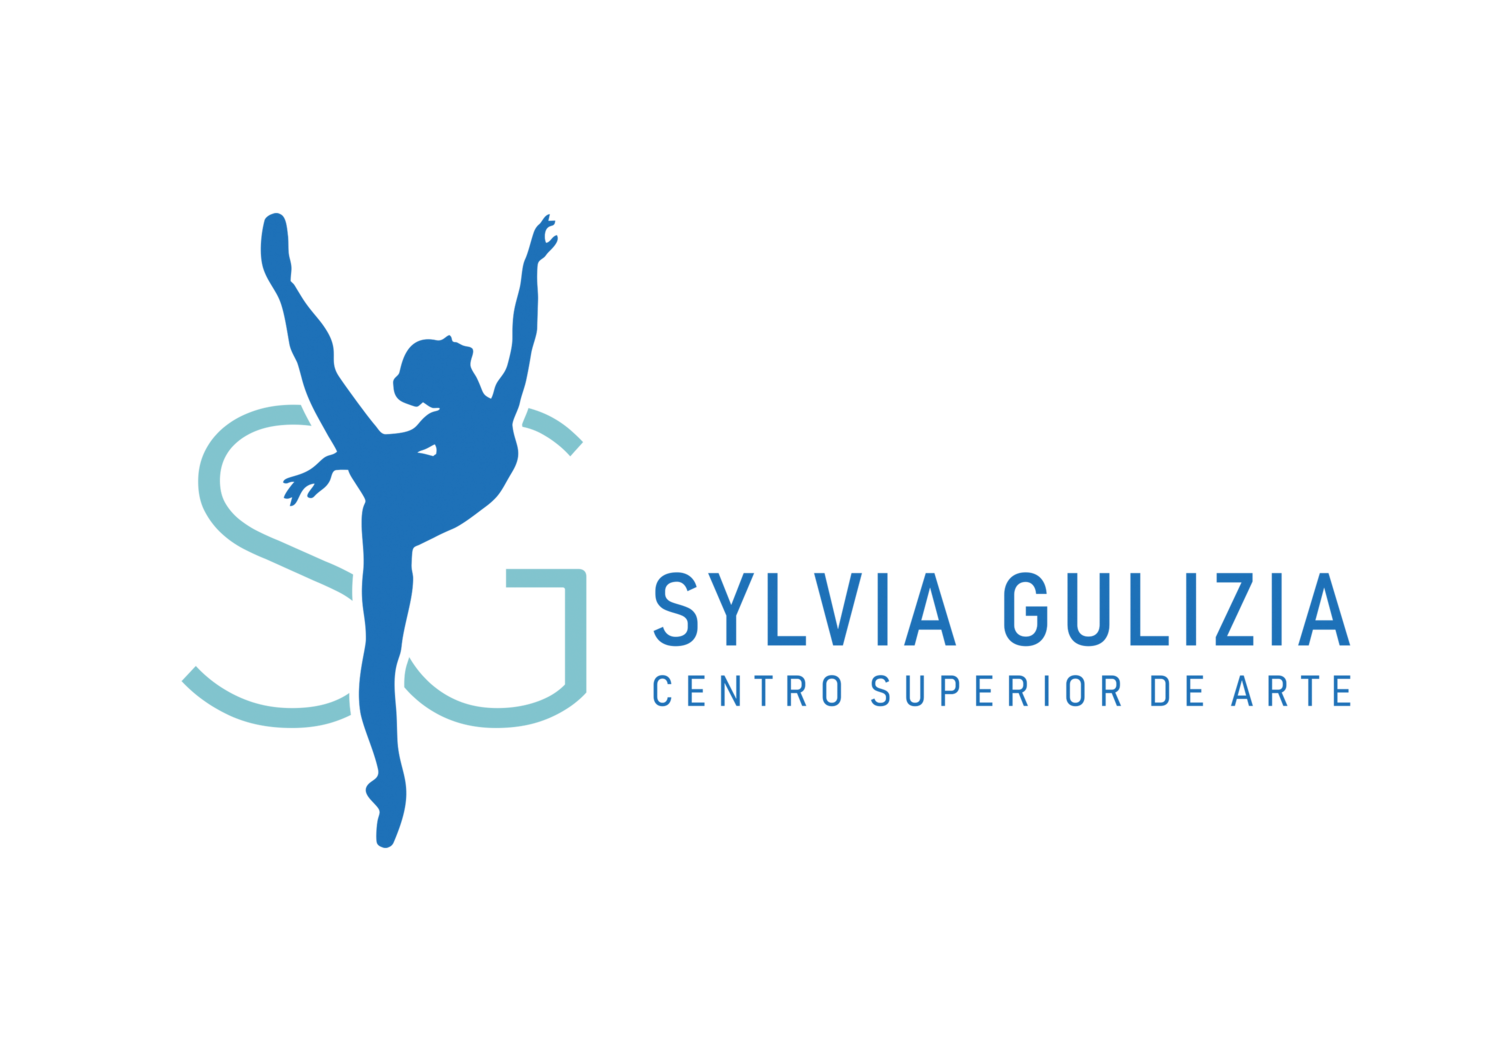 Centro Superior de Arte Sylvia Gulizia